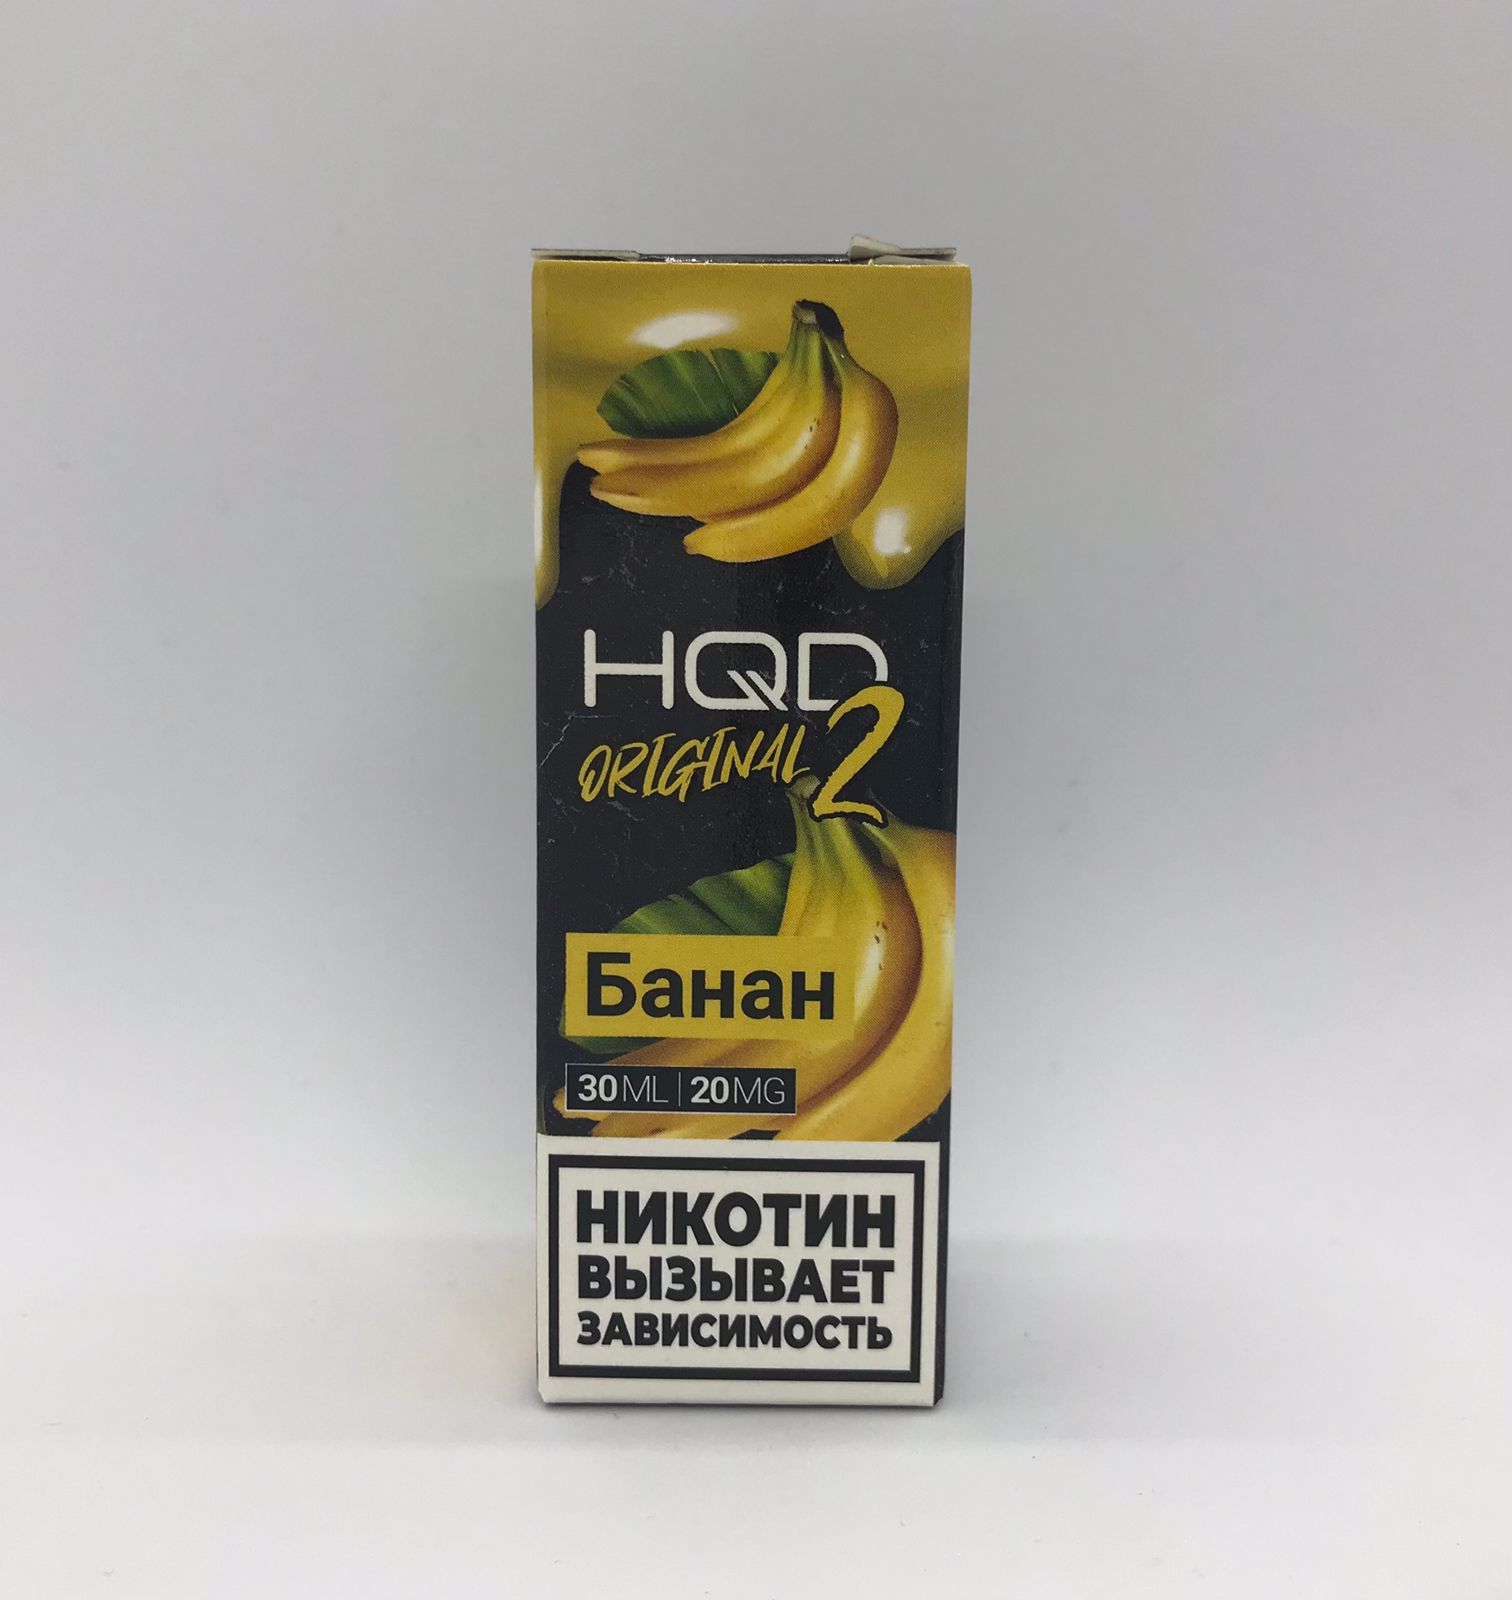 HQD ORIGINAL 2.0 / Банана